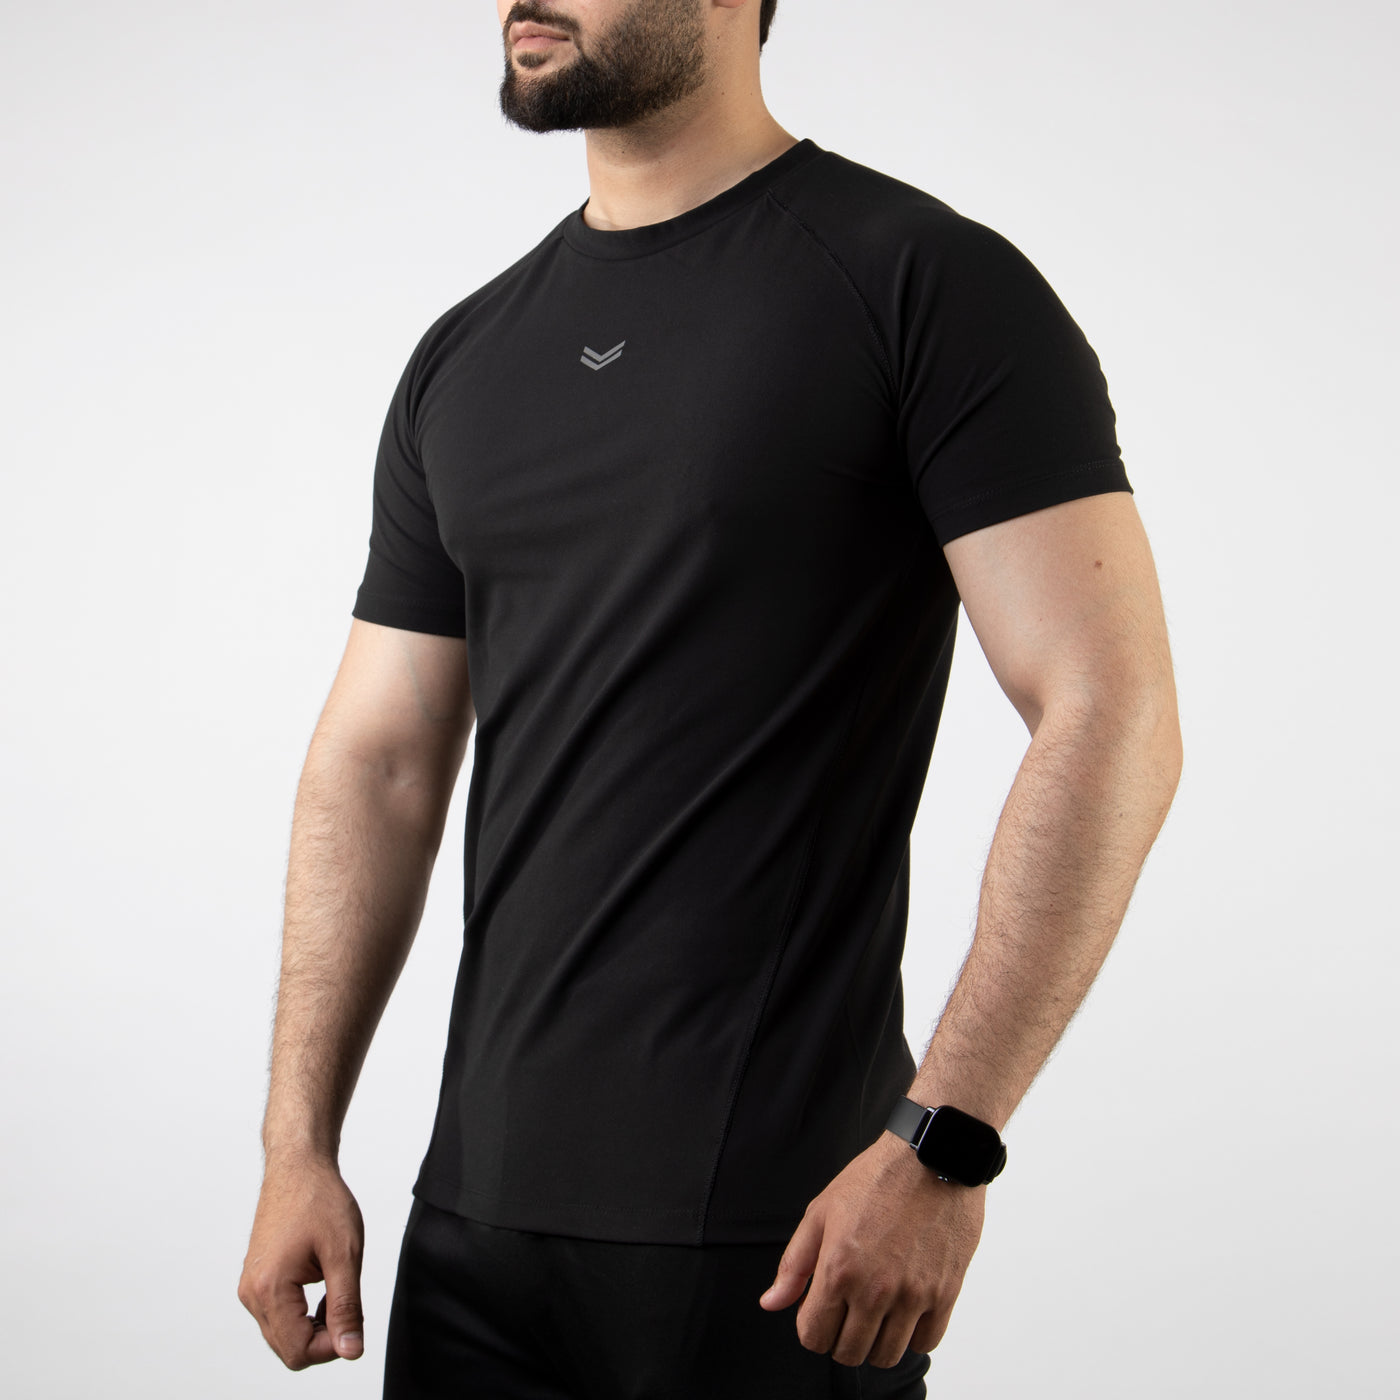 Black 4-Way Stretch Training T-Shirt with Reflective Logo